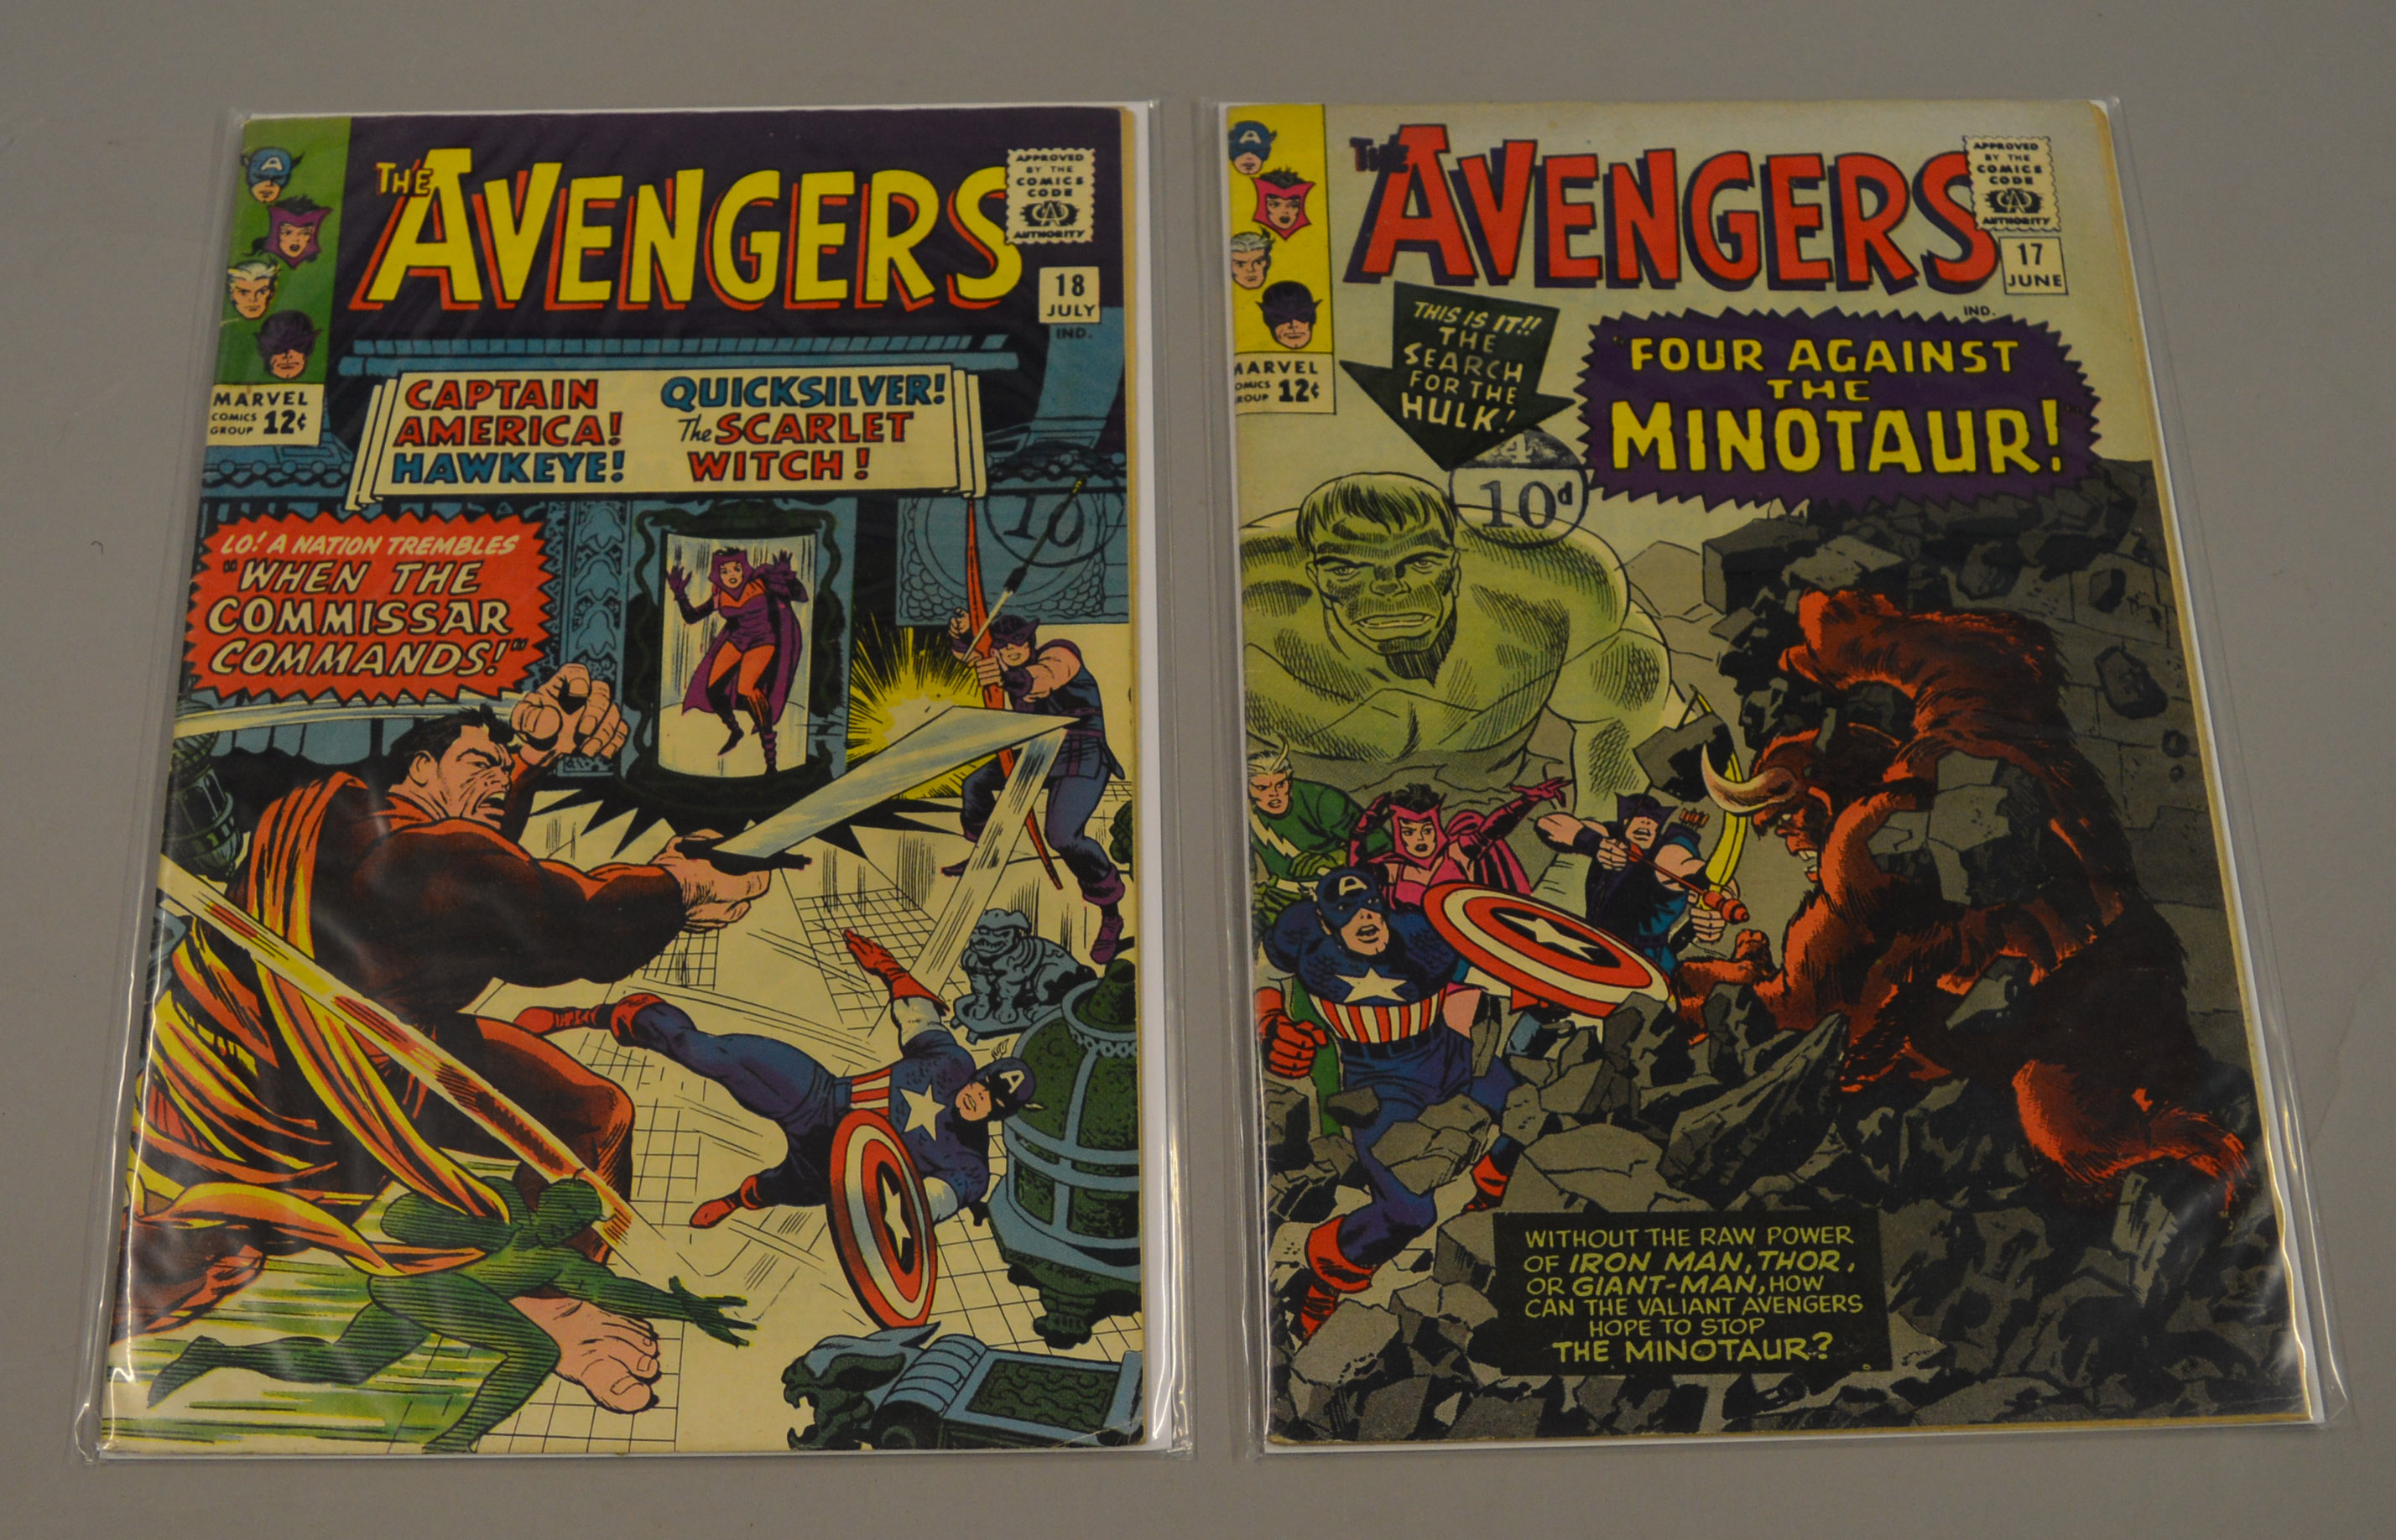 Marvel Avengers #17 & #18 - 2 very high grade early Avengers comics from 1965